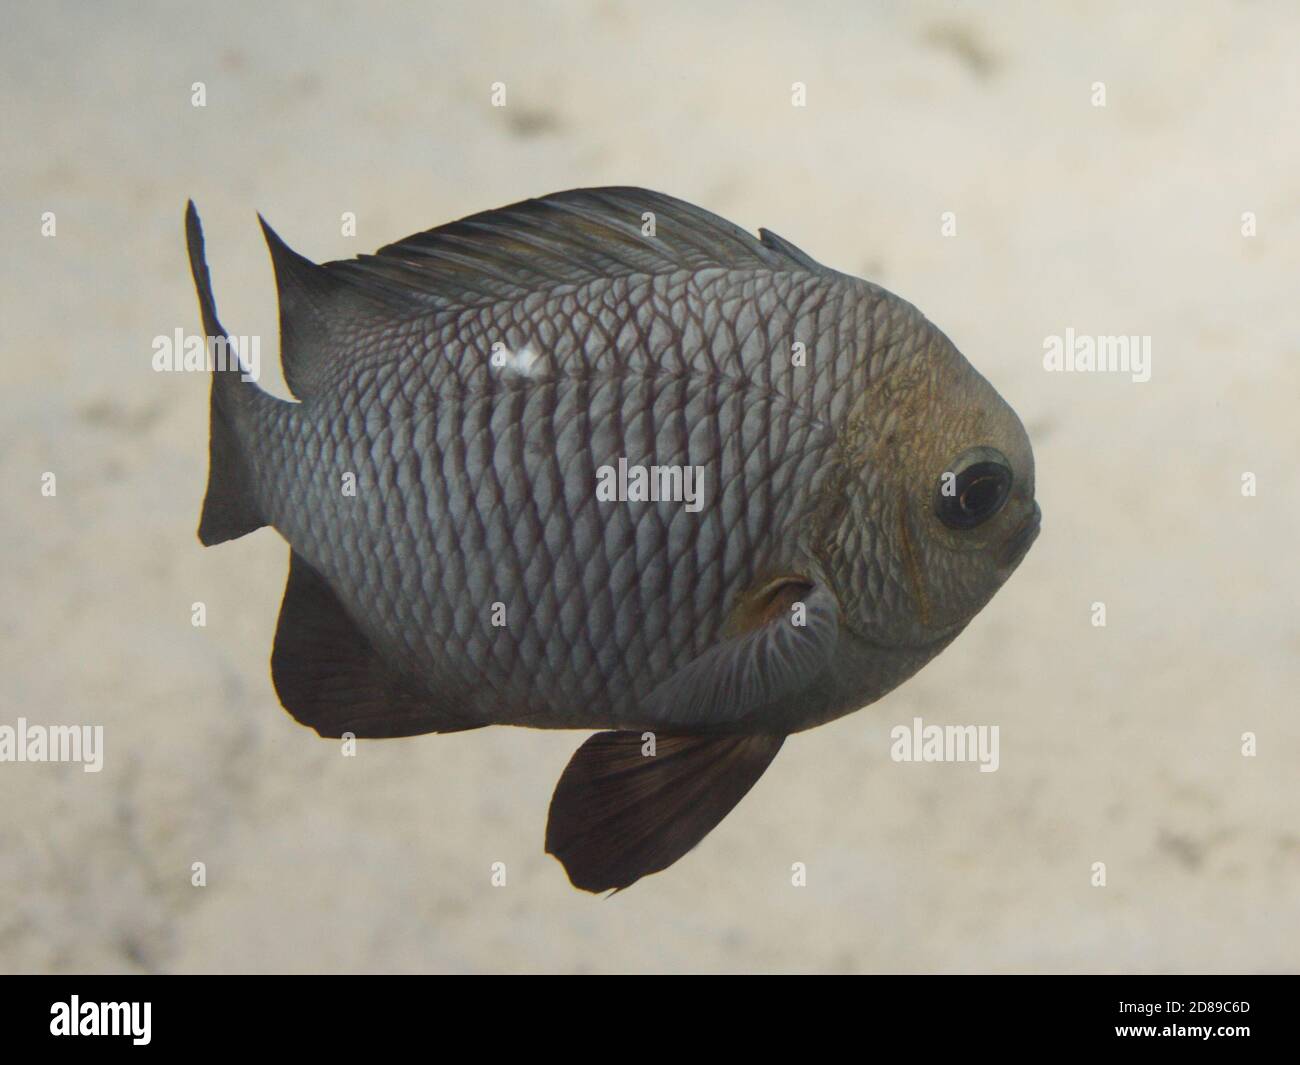 Threespot dascyllus tropical fish over sandy sea bottom Stock Photo